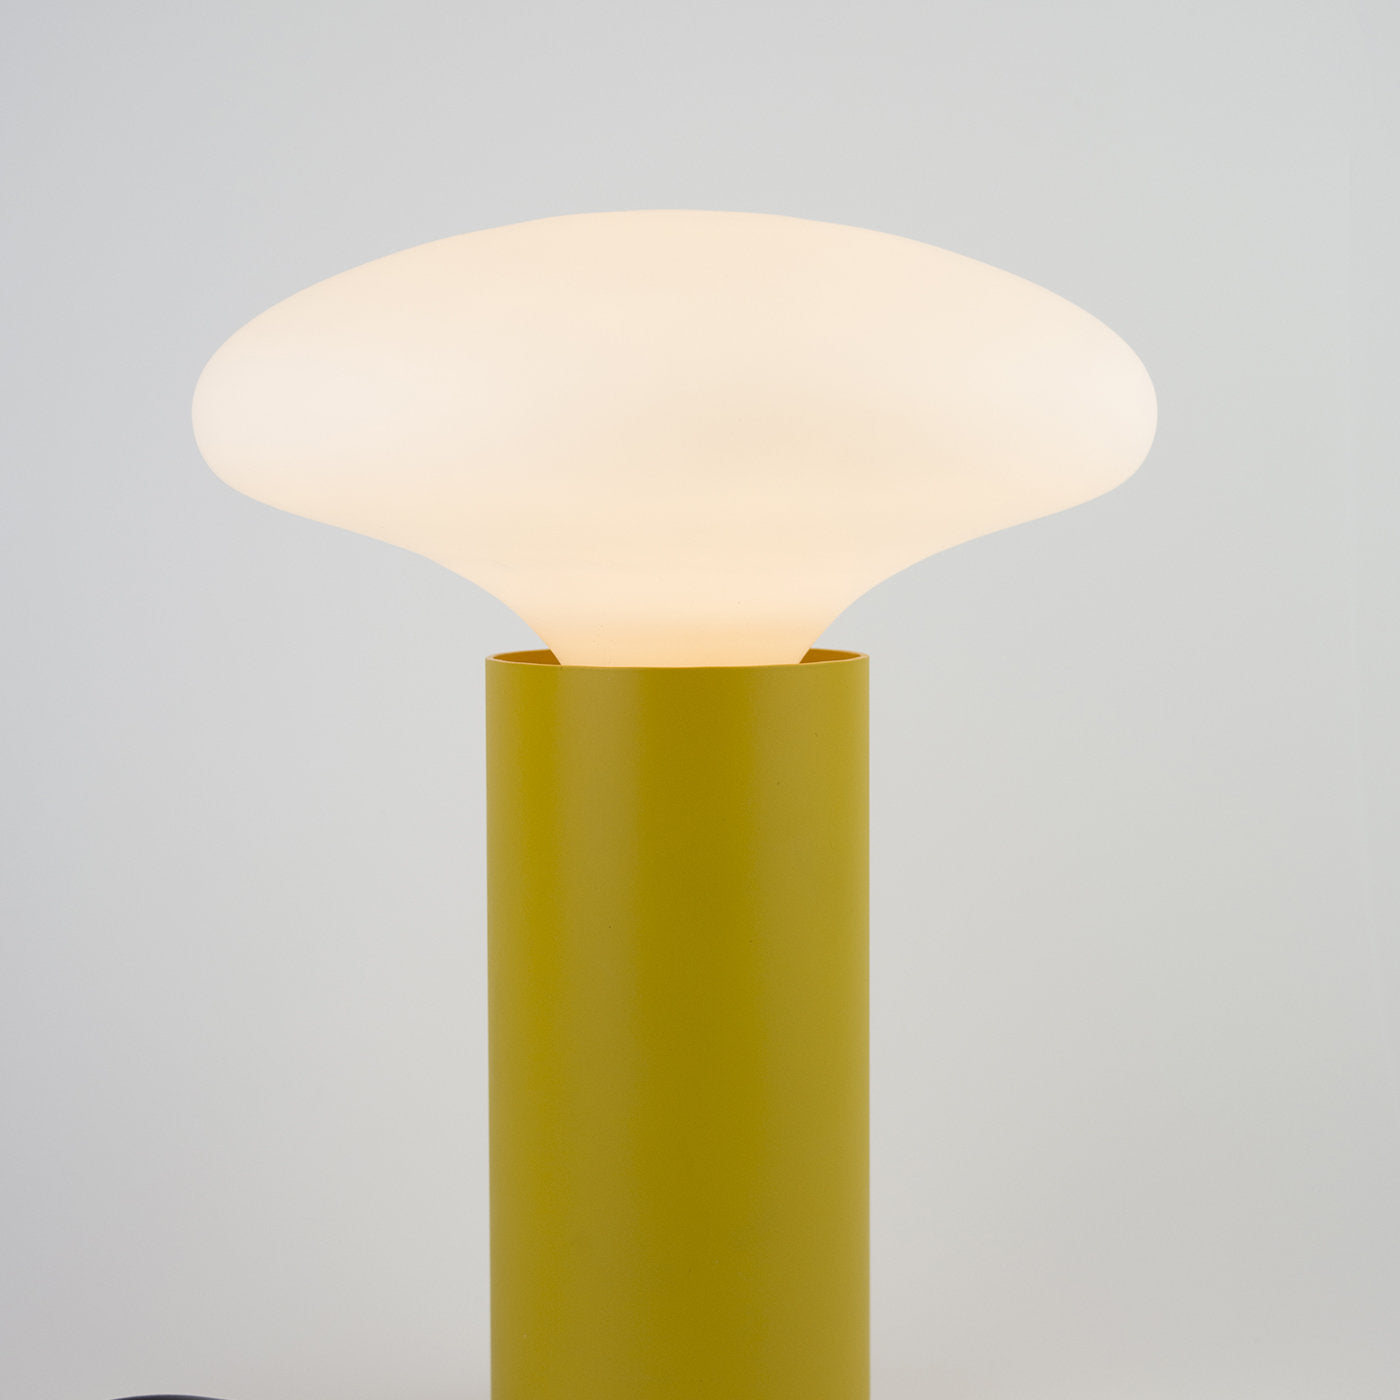 Stem Table Lamp by Alalda Design - Alternative view 3